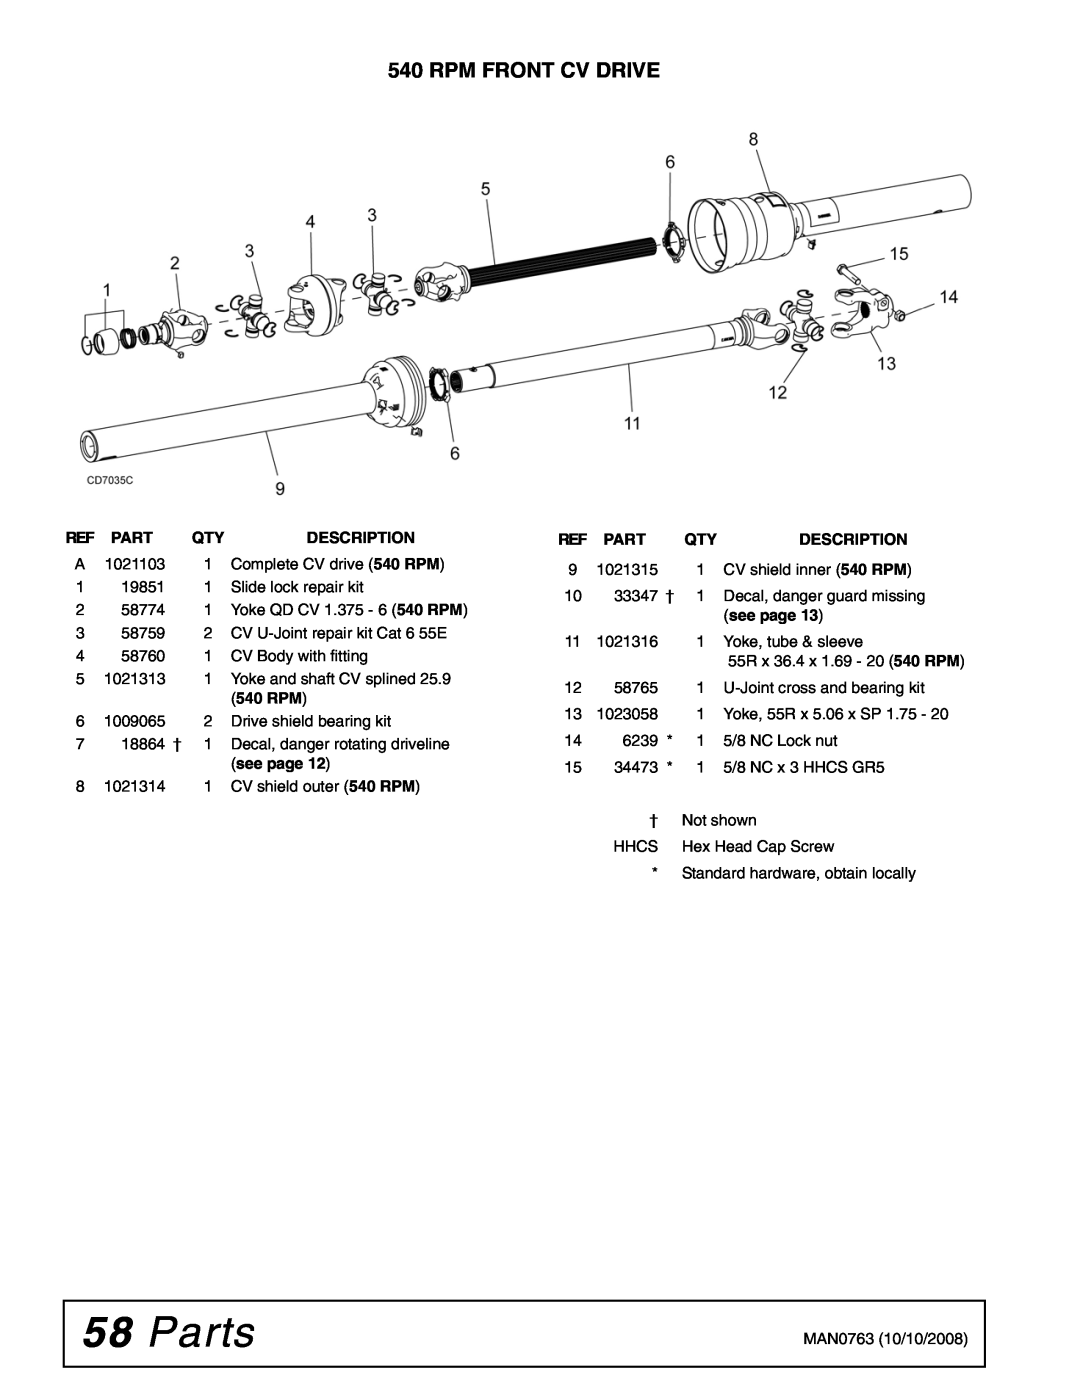 Woods Equipment BW240HDQ manual Parts, Rpm Front Cv Drive, Description, 540 RPM, see page 